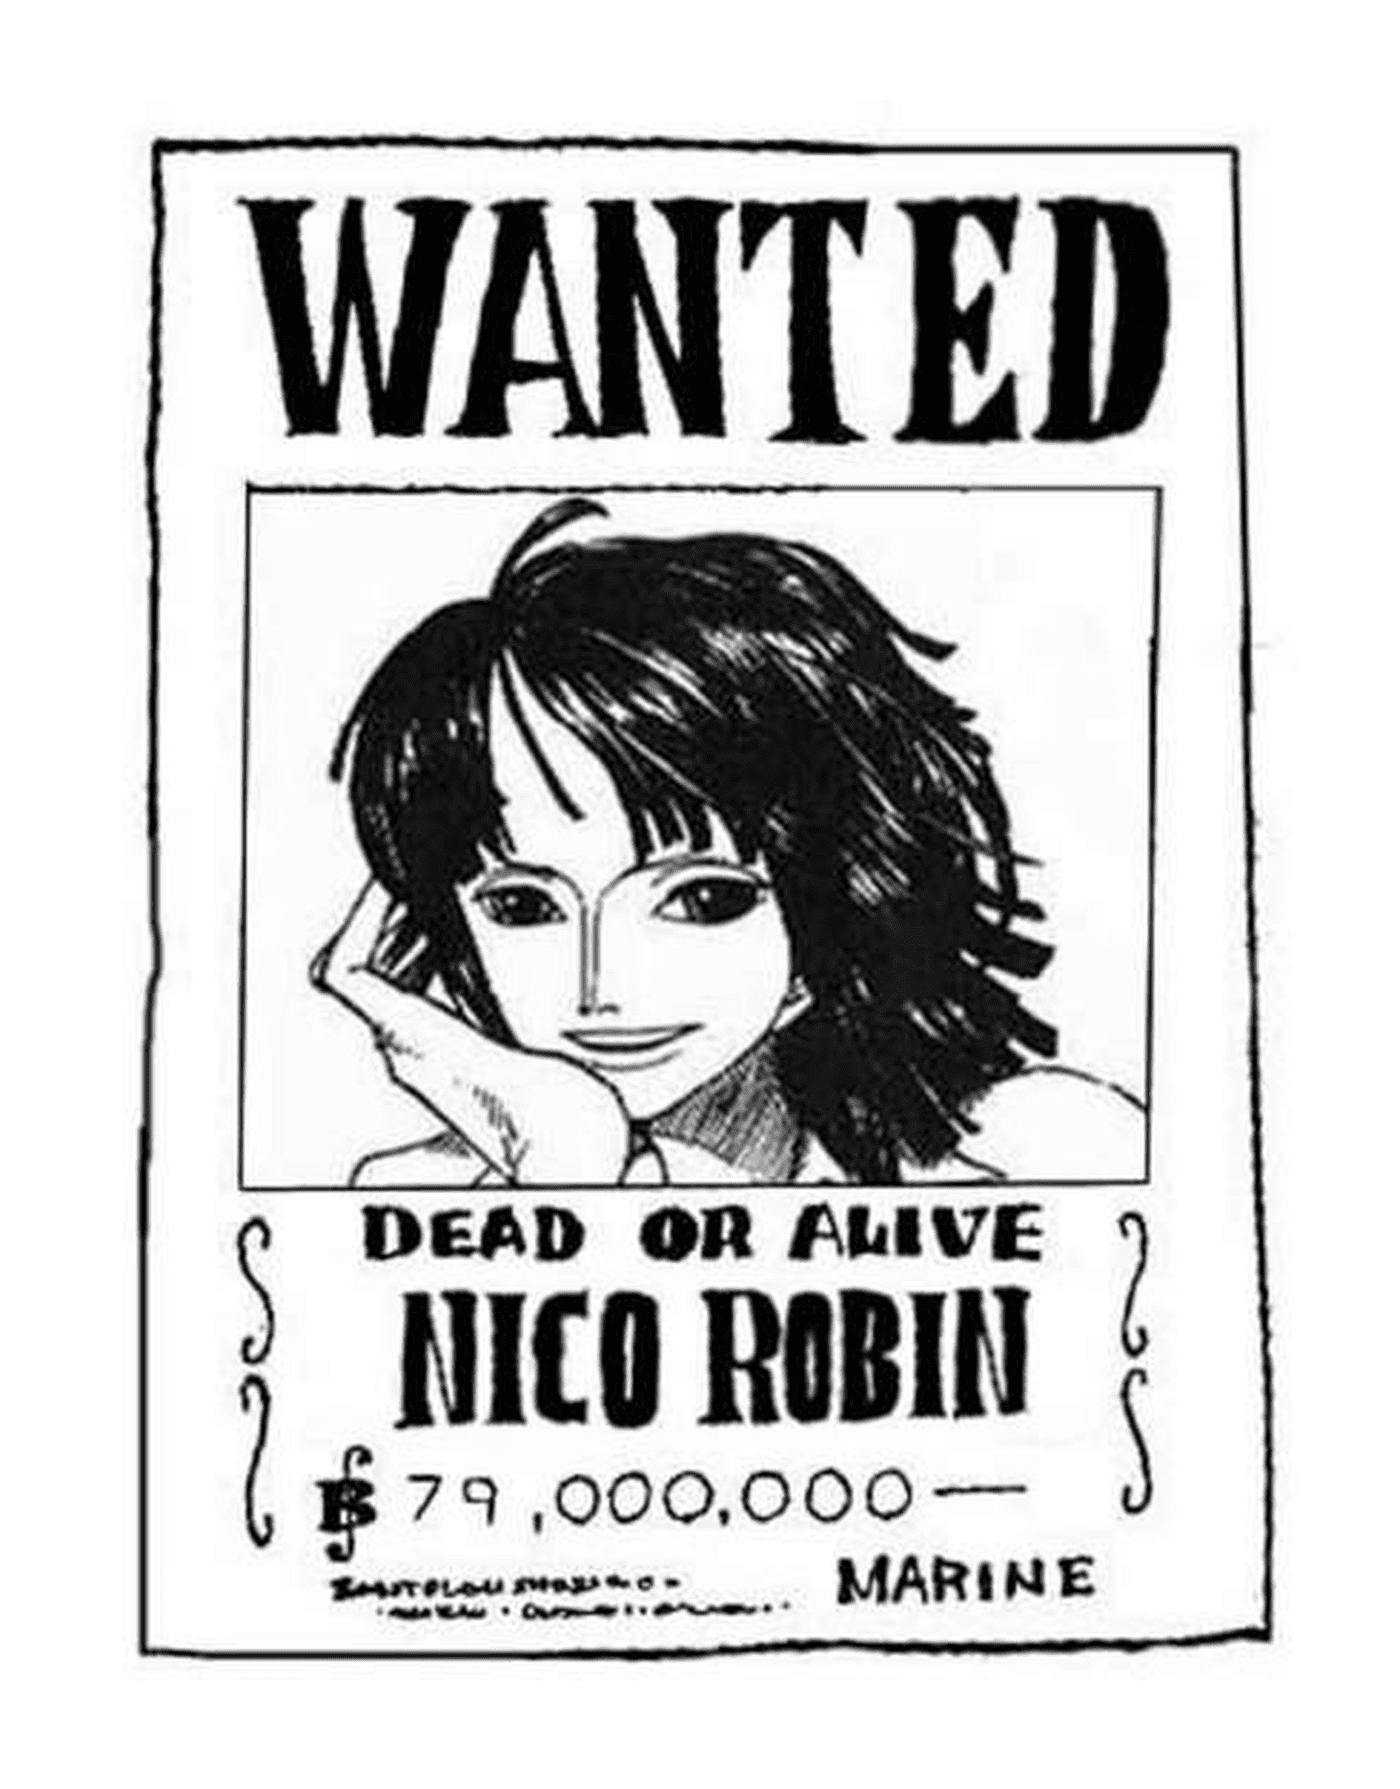  Quis Nico Robin[20420] Quis Nico Robin, vivo ou morto 